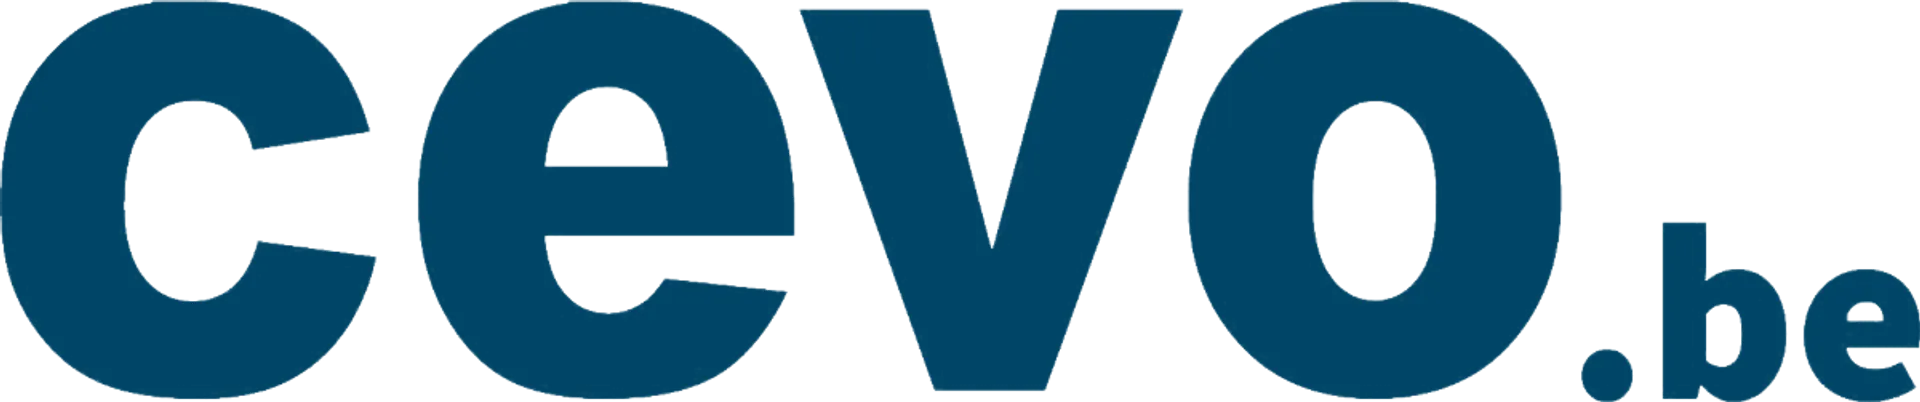 CEVO + logo in de folder van deze week